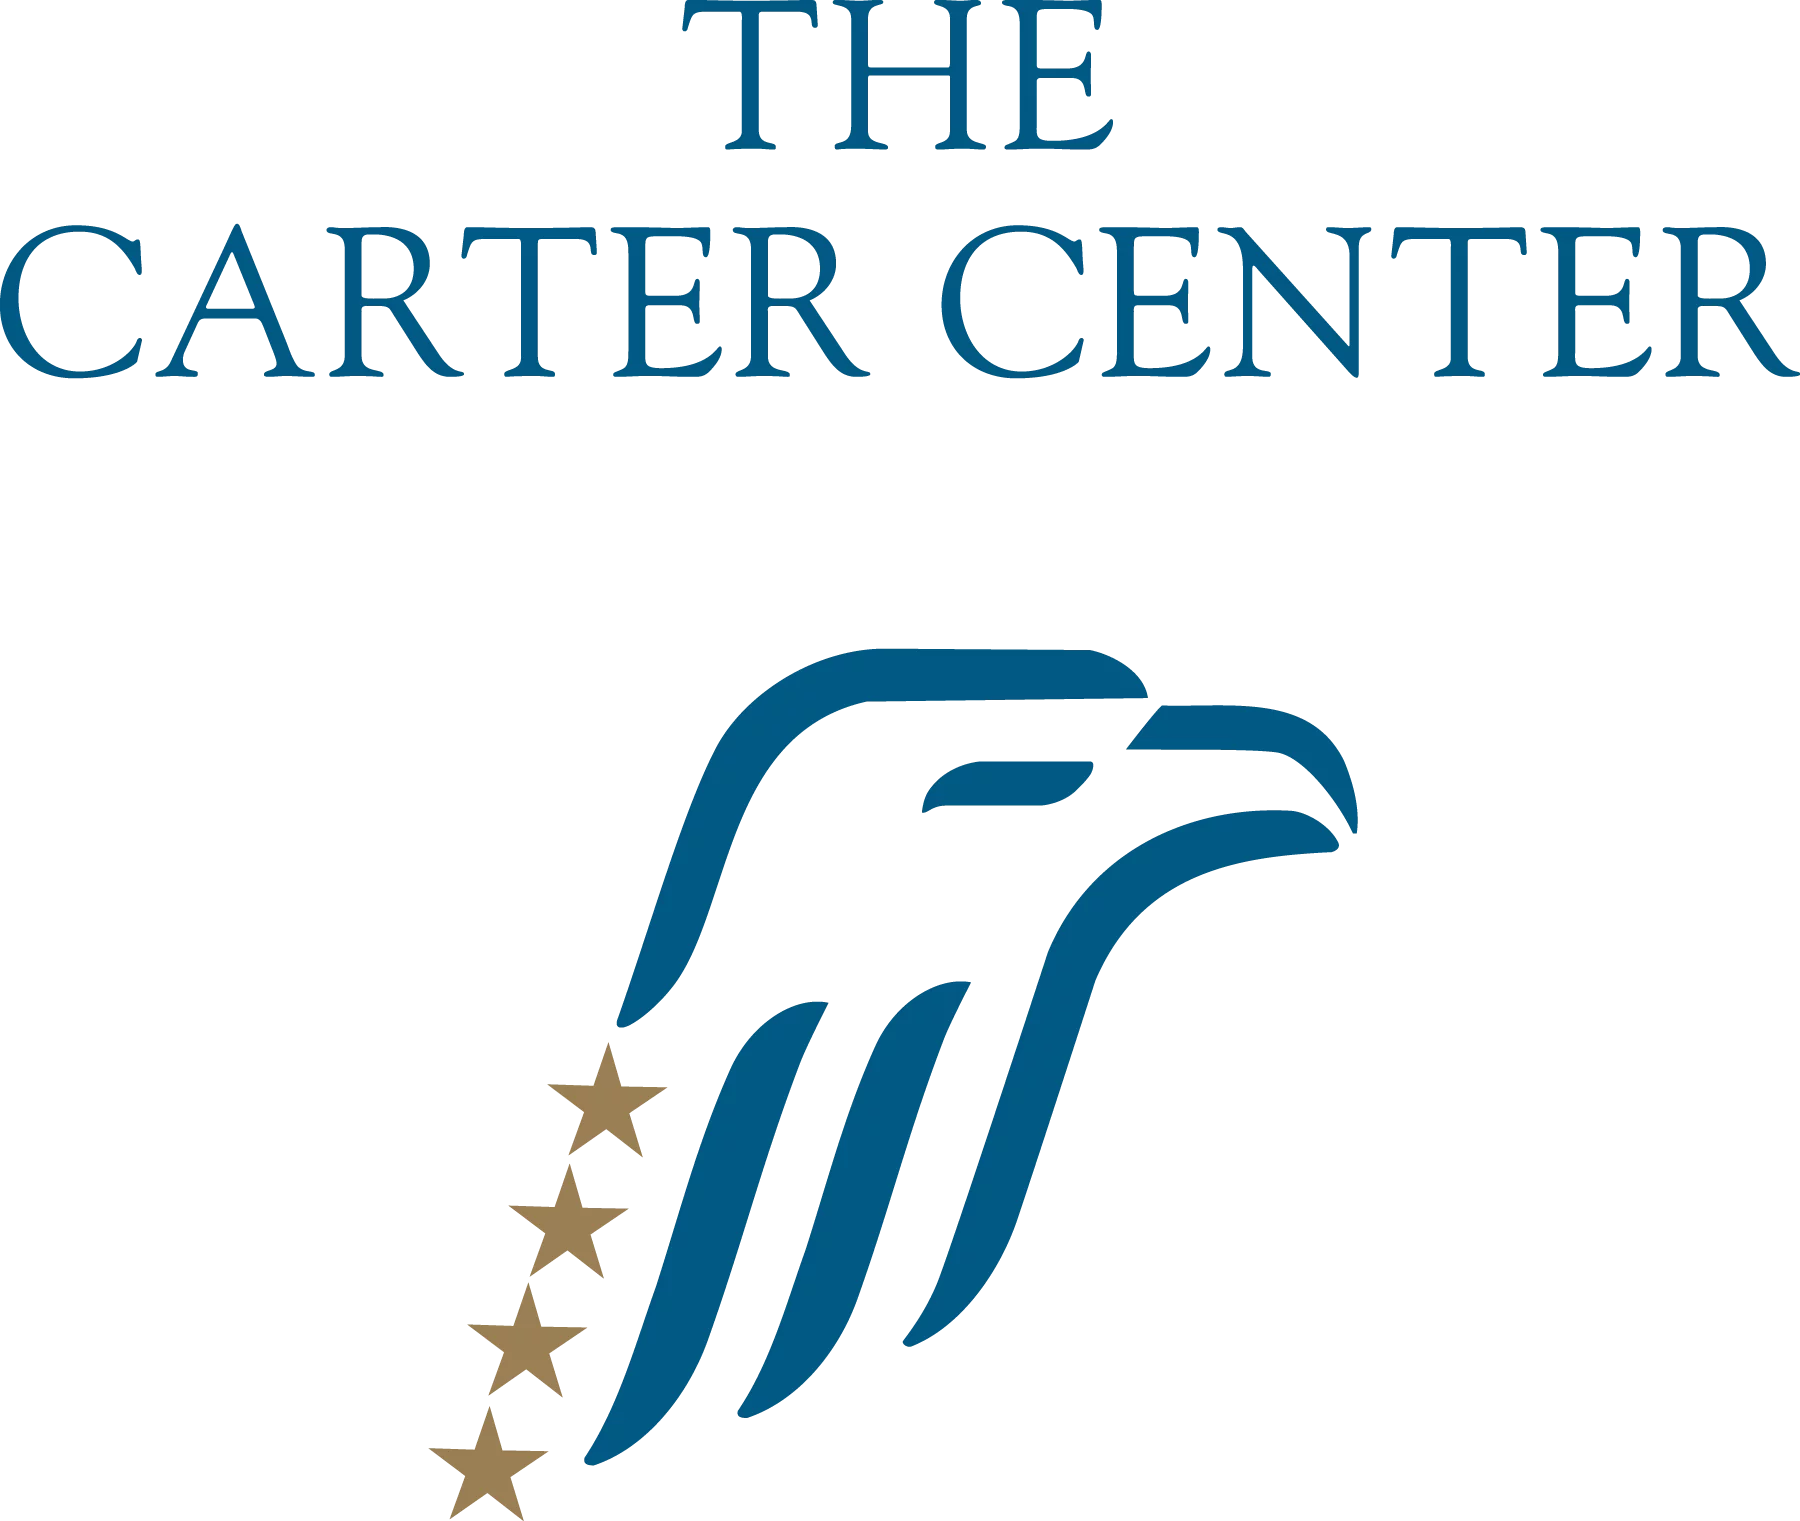 Carter Center is currently recruiting Technical Advisor Guinea Worm Eradication Program (GWEP)